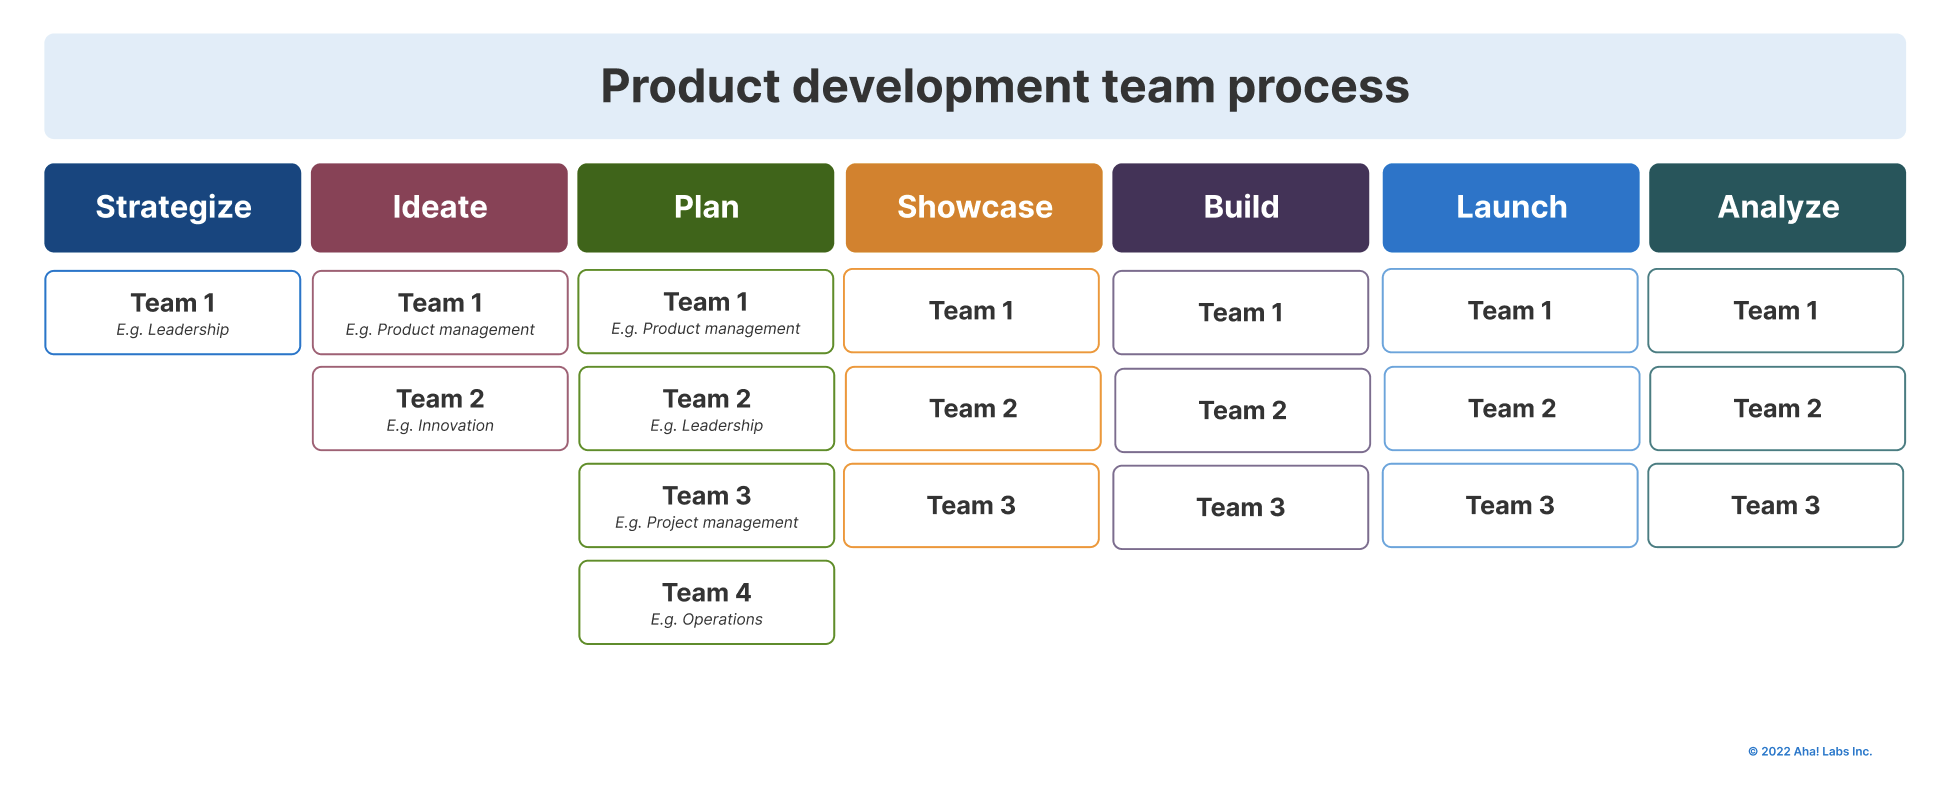 Product development team process flowchart